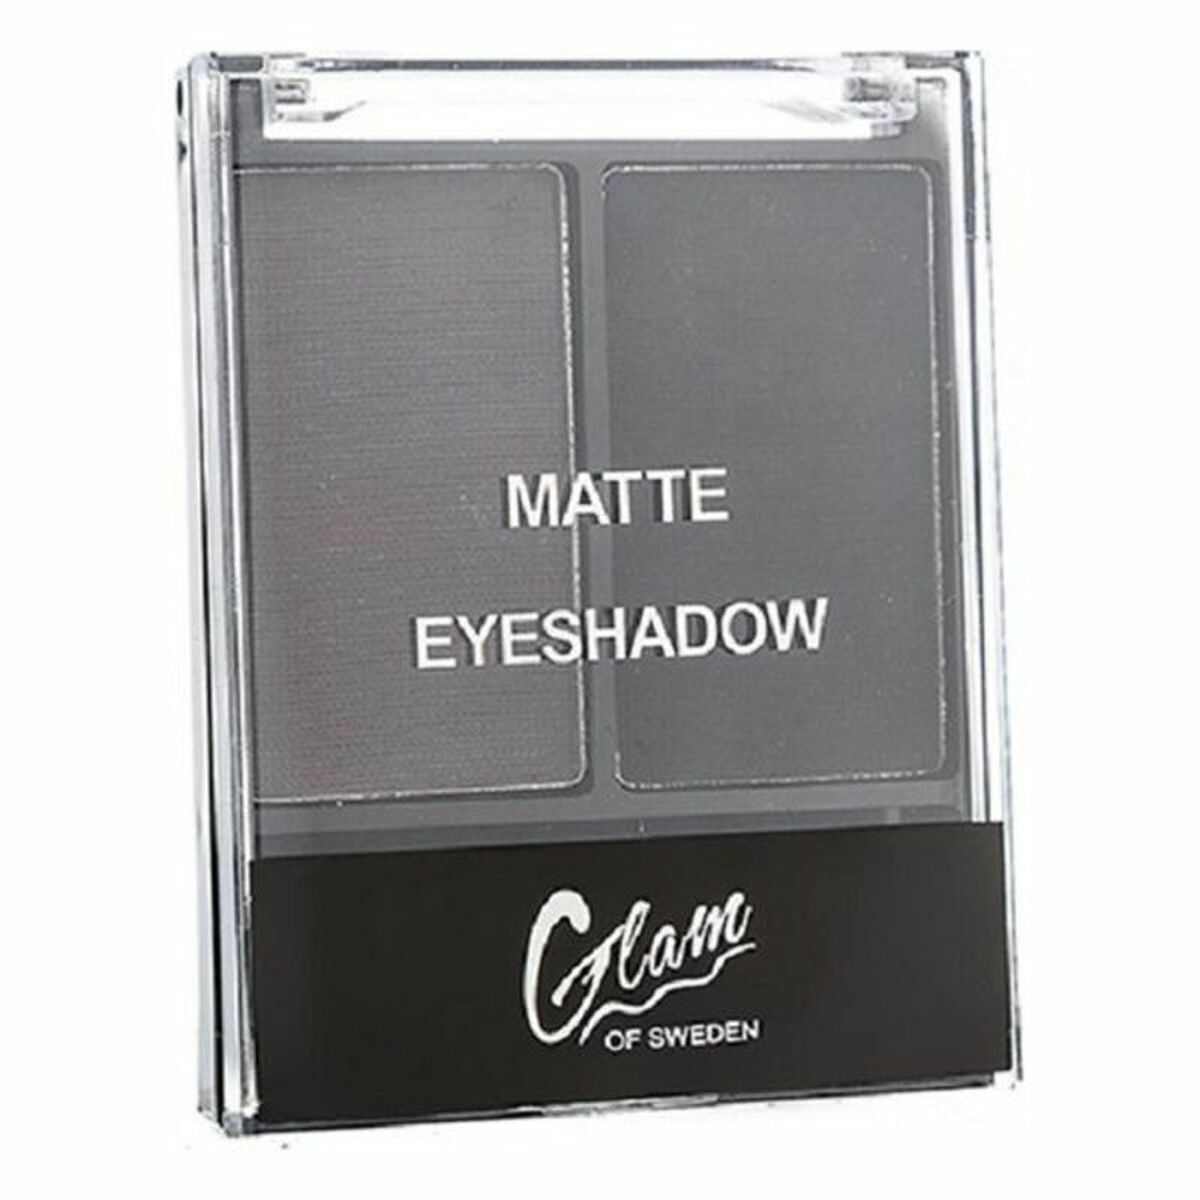 Sombra de ojos Matte Glam Of Sweden Eyeshadow matte 03 Dramatic (4 g)